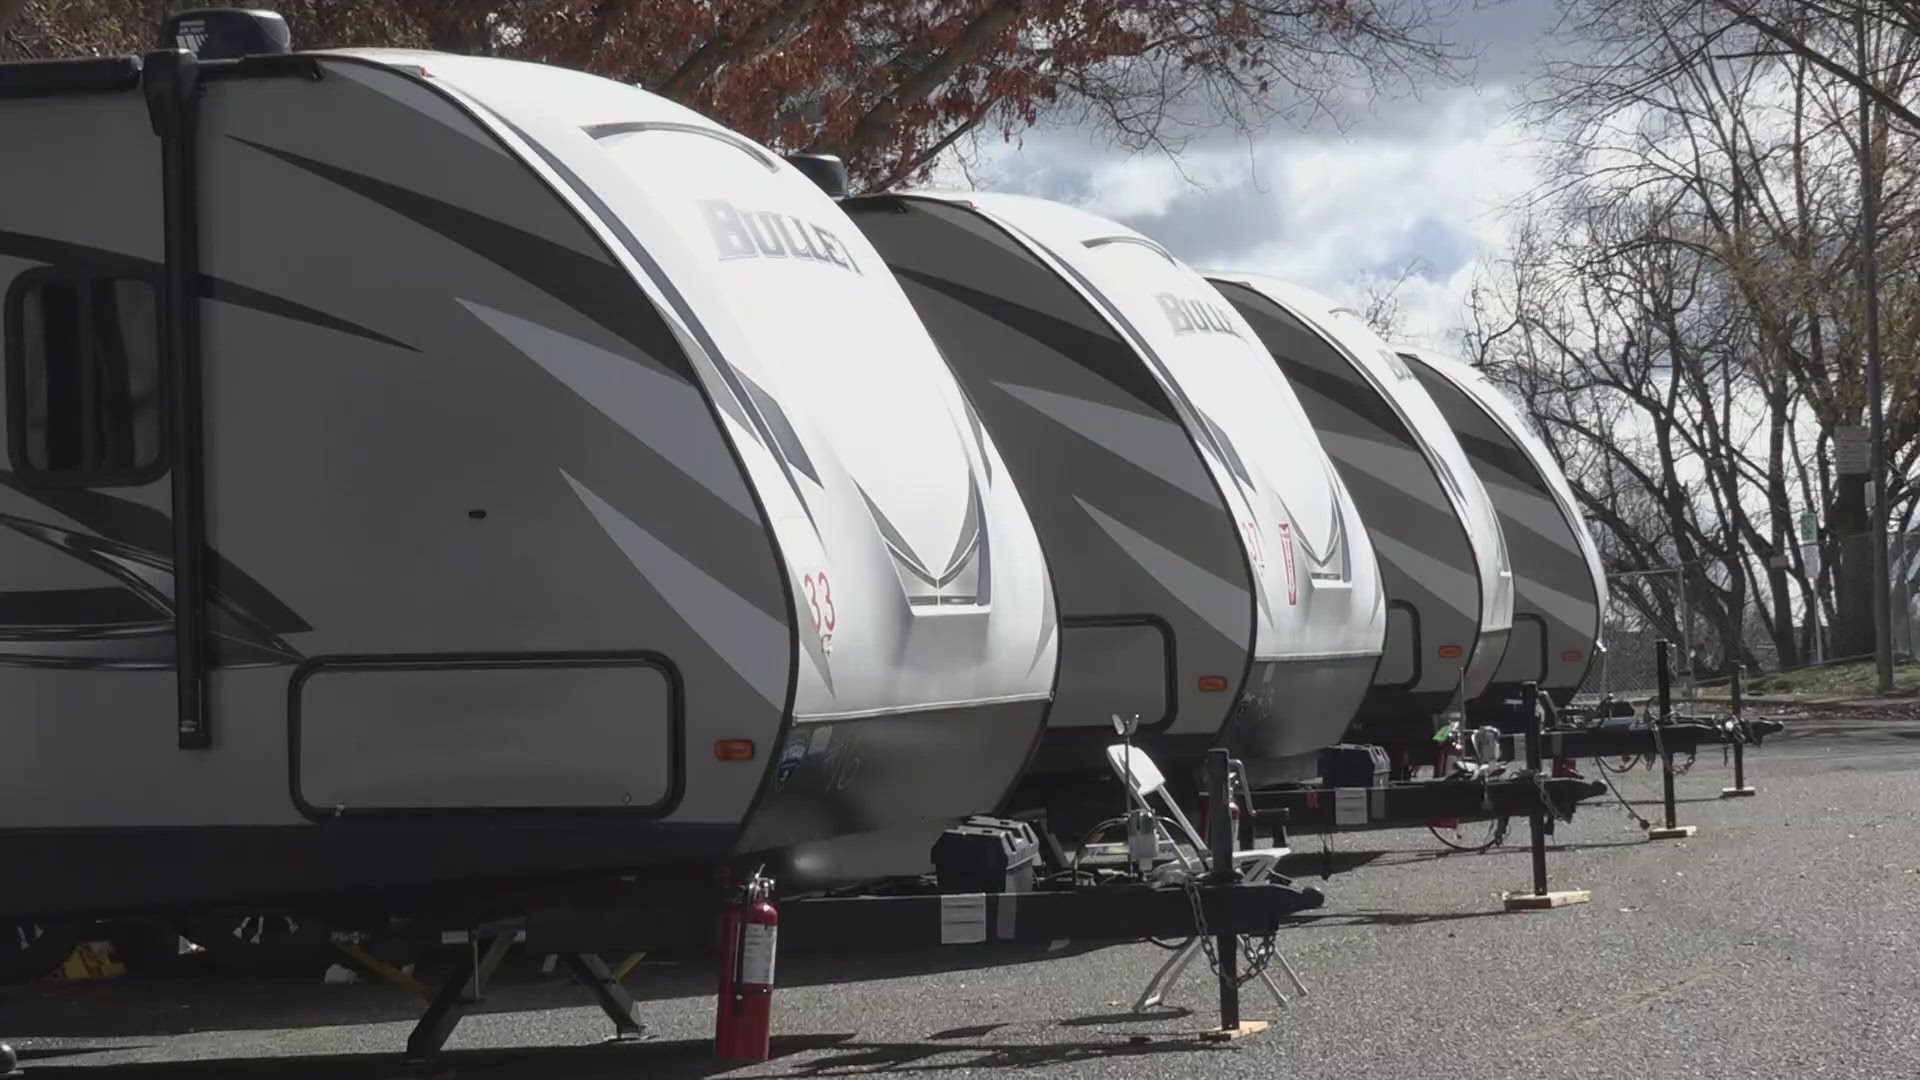 Sacramento returns tents to Miller Park 'safe ground' site